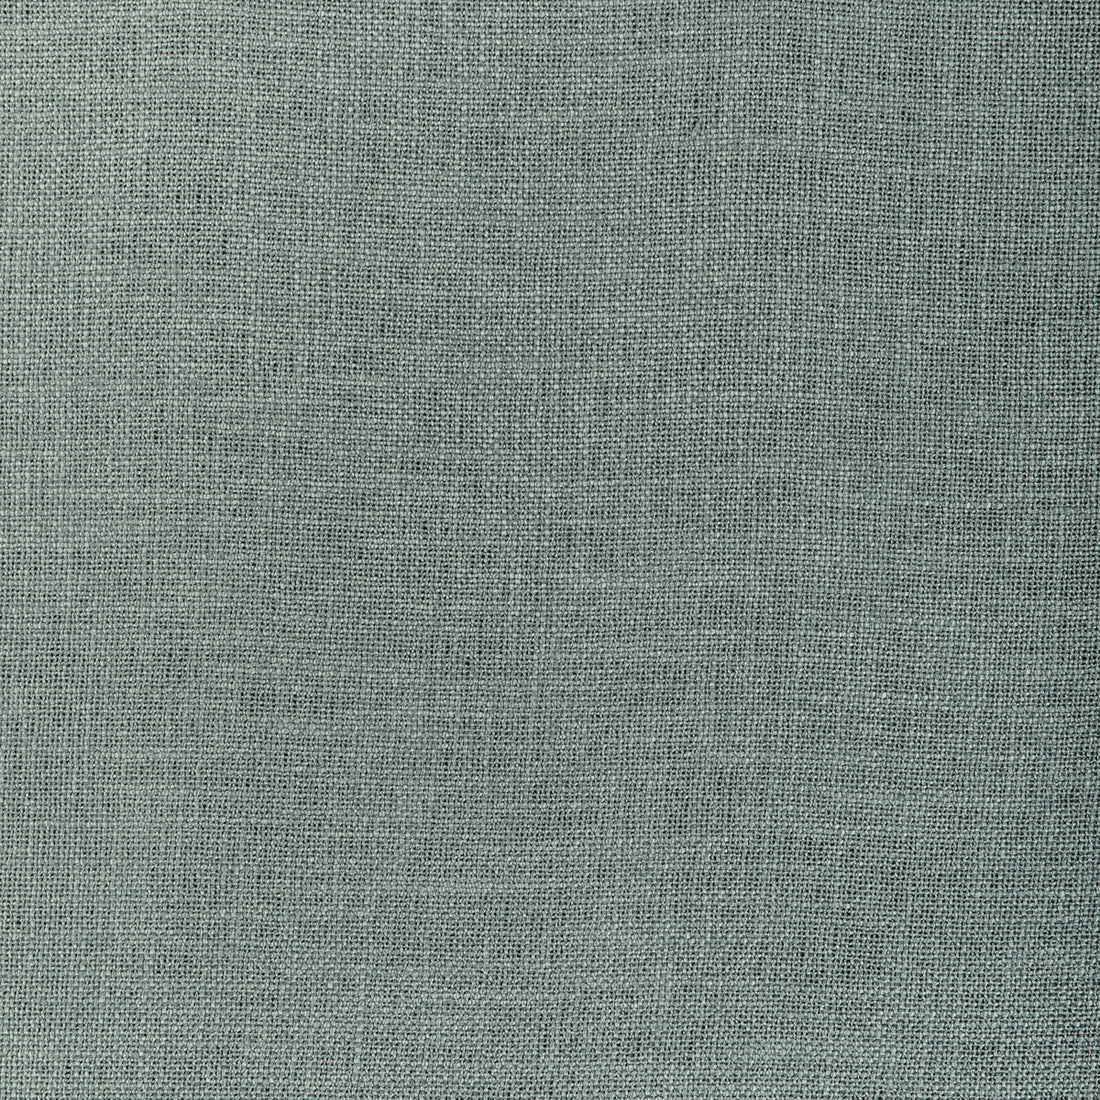 Kravet Design fabric in 90011-113 color - pattern 90011.113.0 - by Kravet Design in the Reveal collection